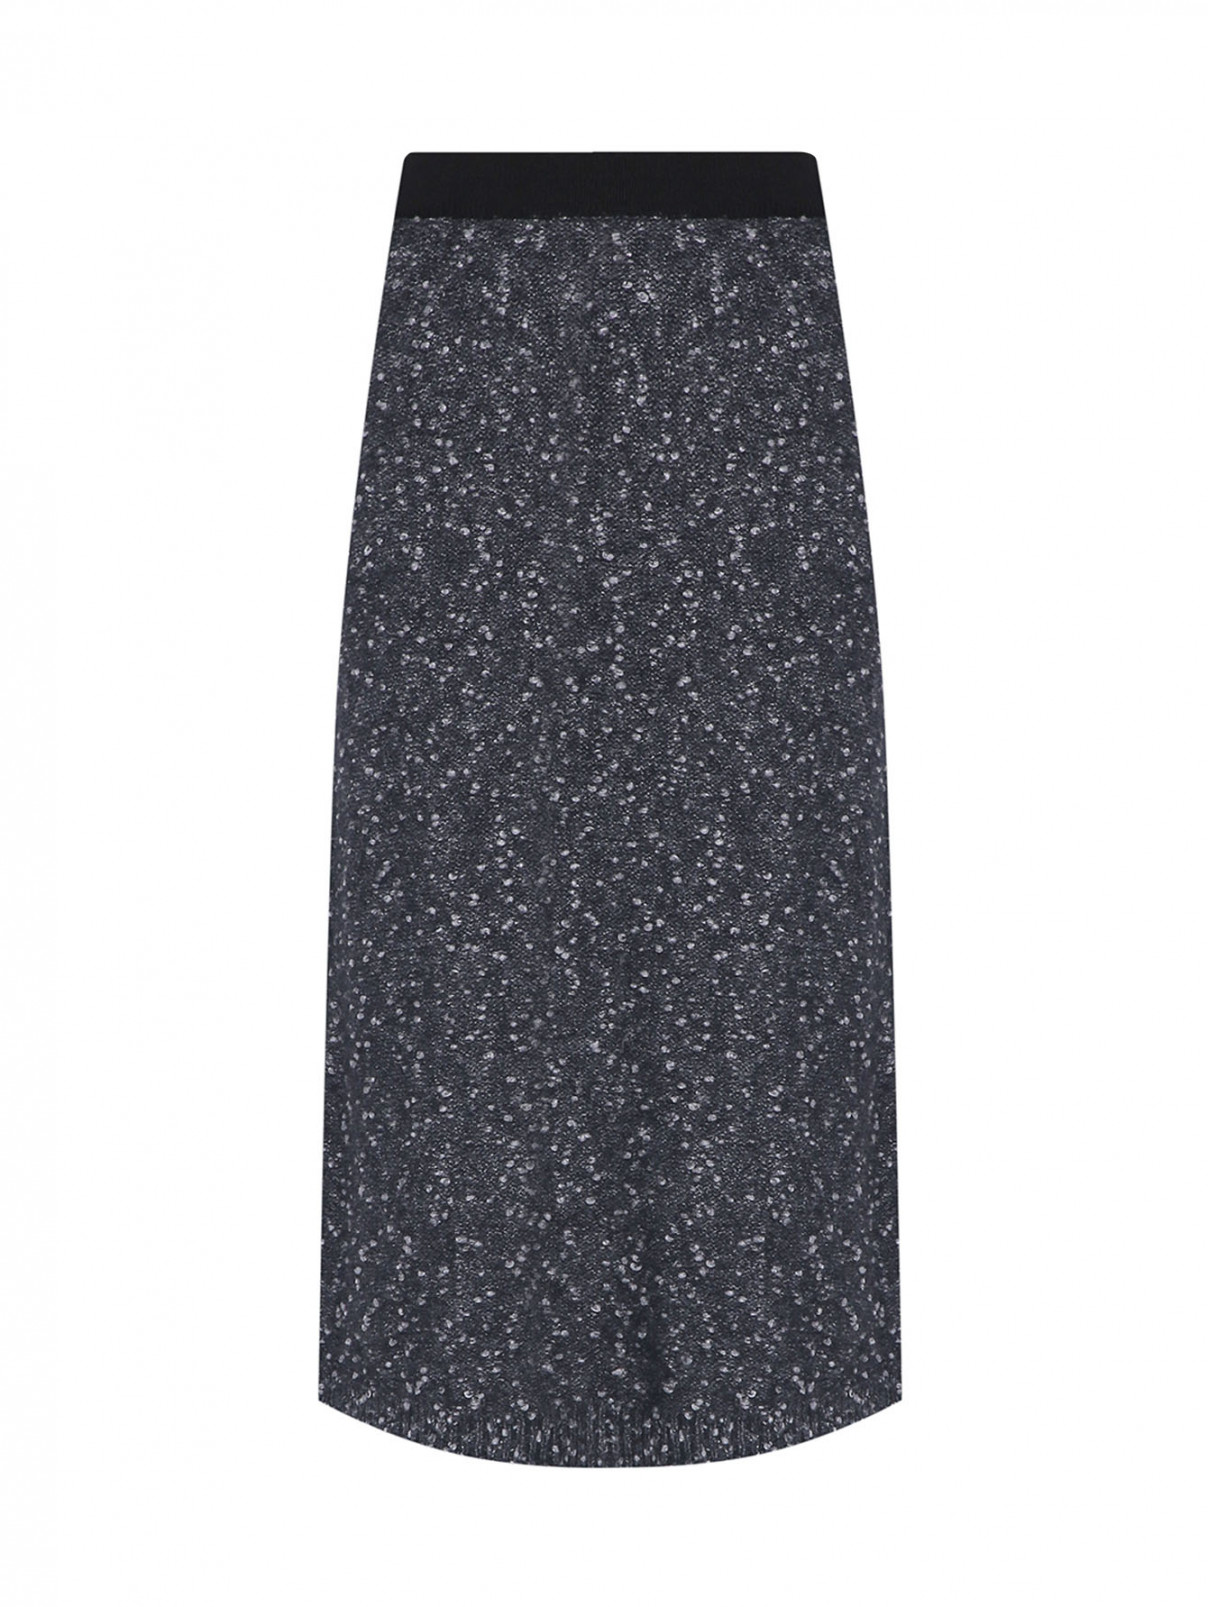 Трикотажная юбка-миди на резинке Max&Co  –  Общий вид  – Цвет:  Узор